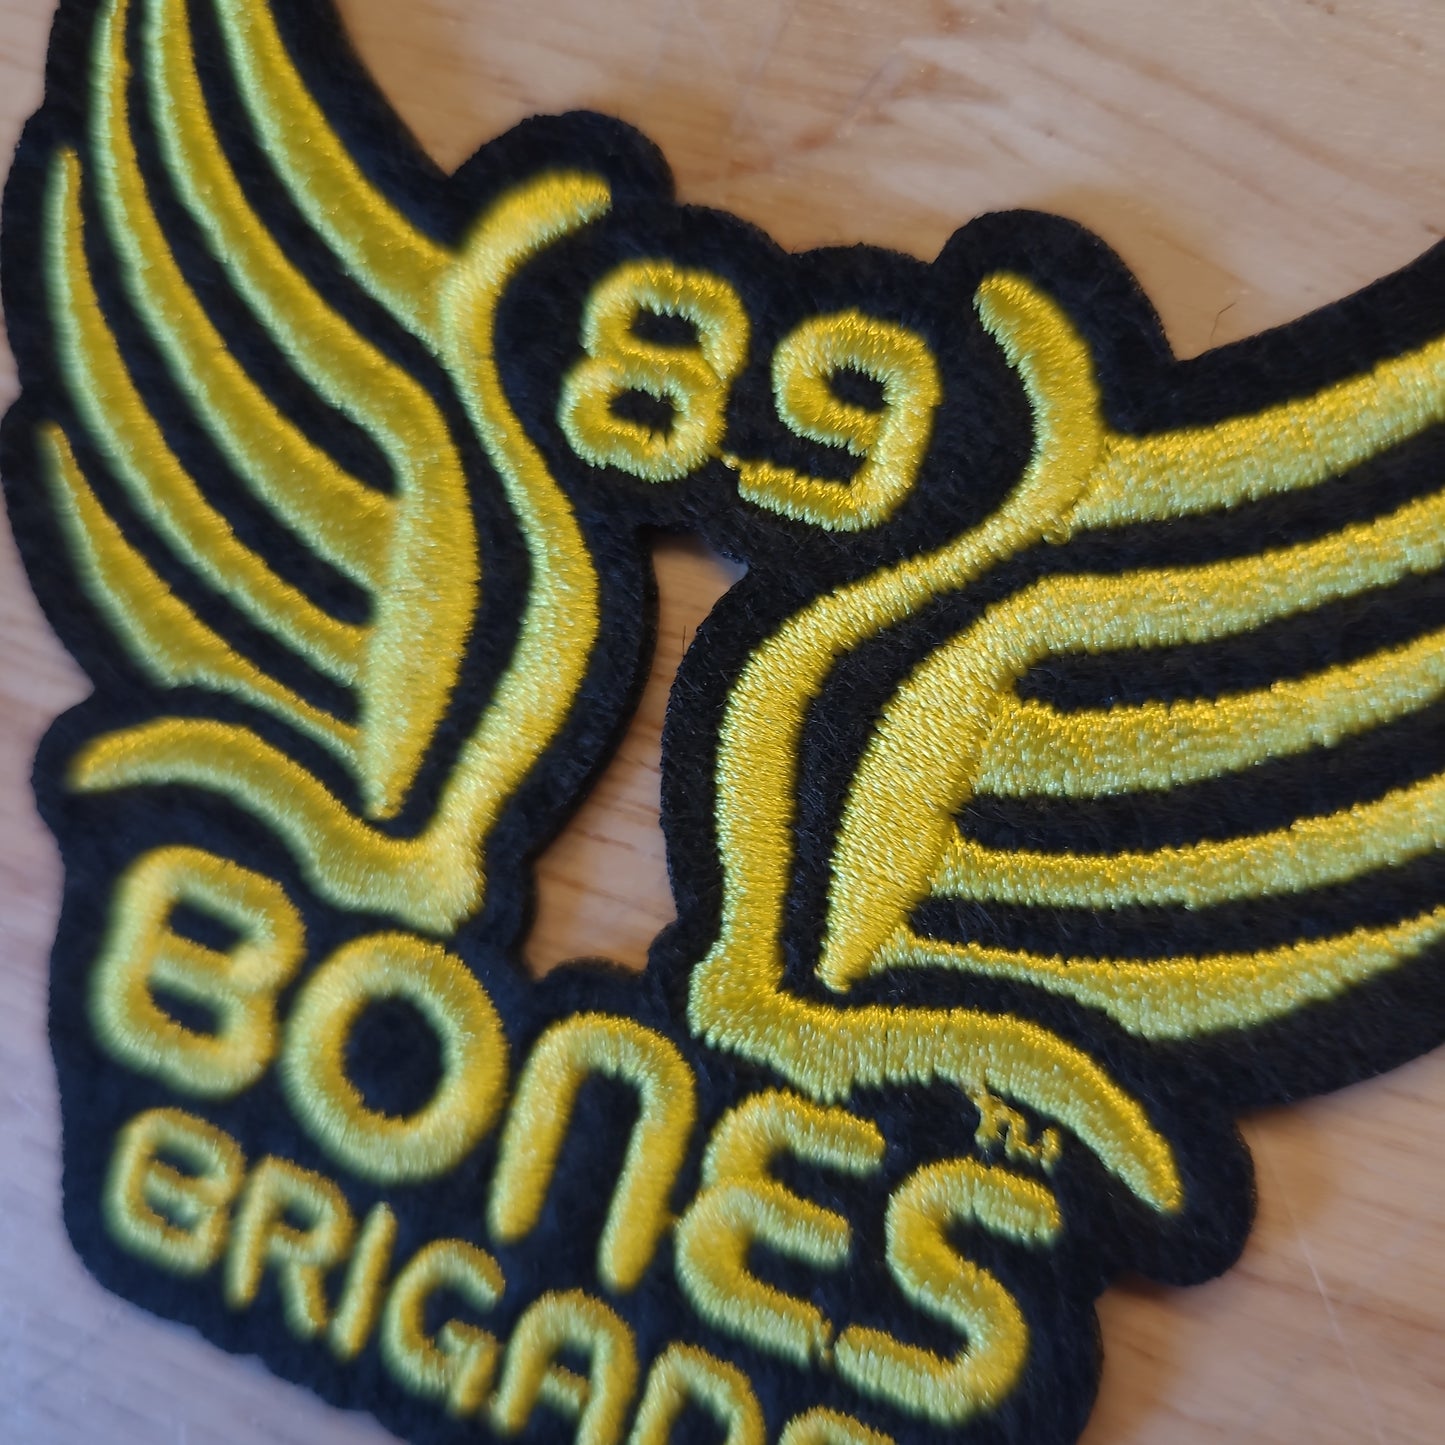 Powell & Peralta Patches - '89 Bones Brigade Wings